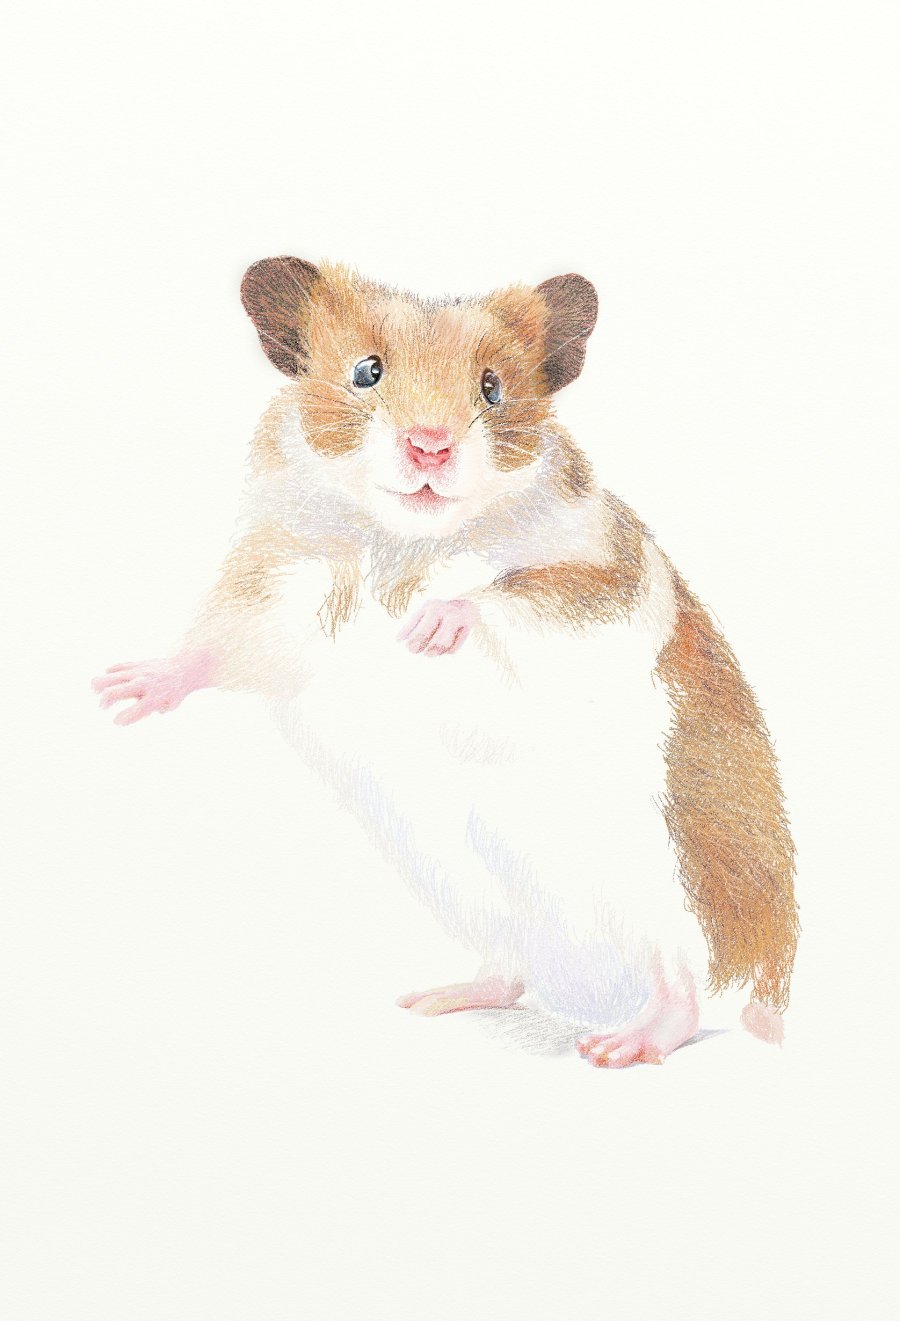 painter绘制一只可爱的小老鼠插画